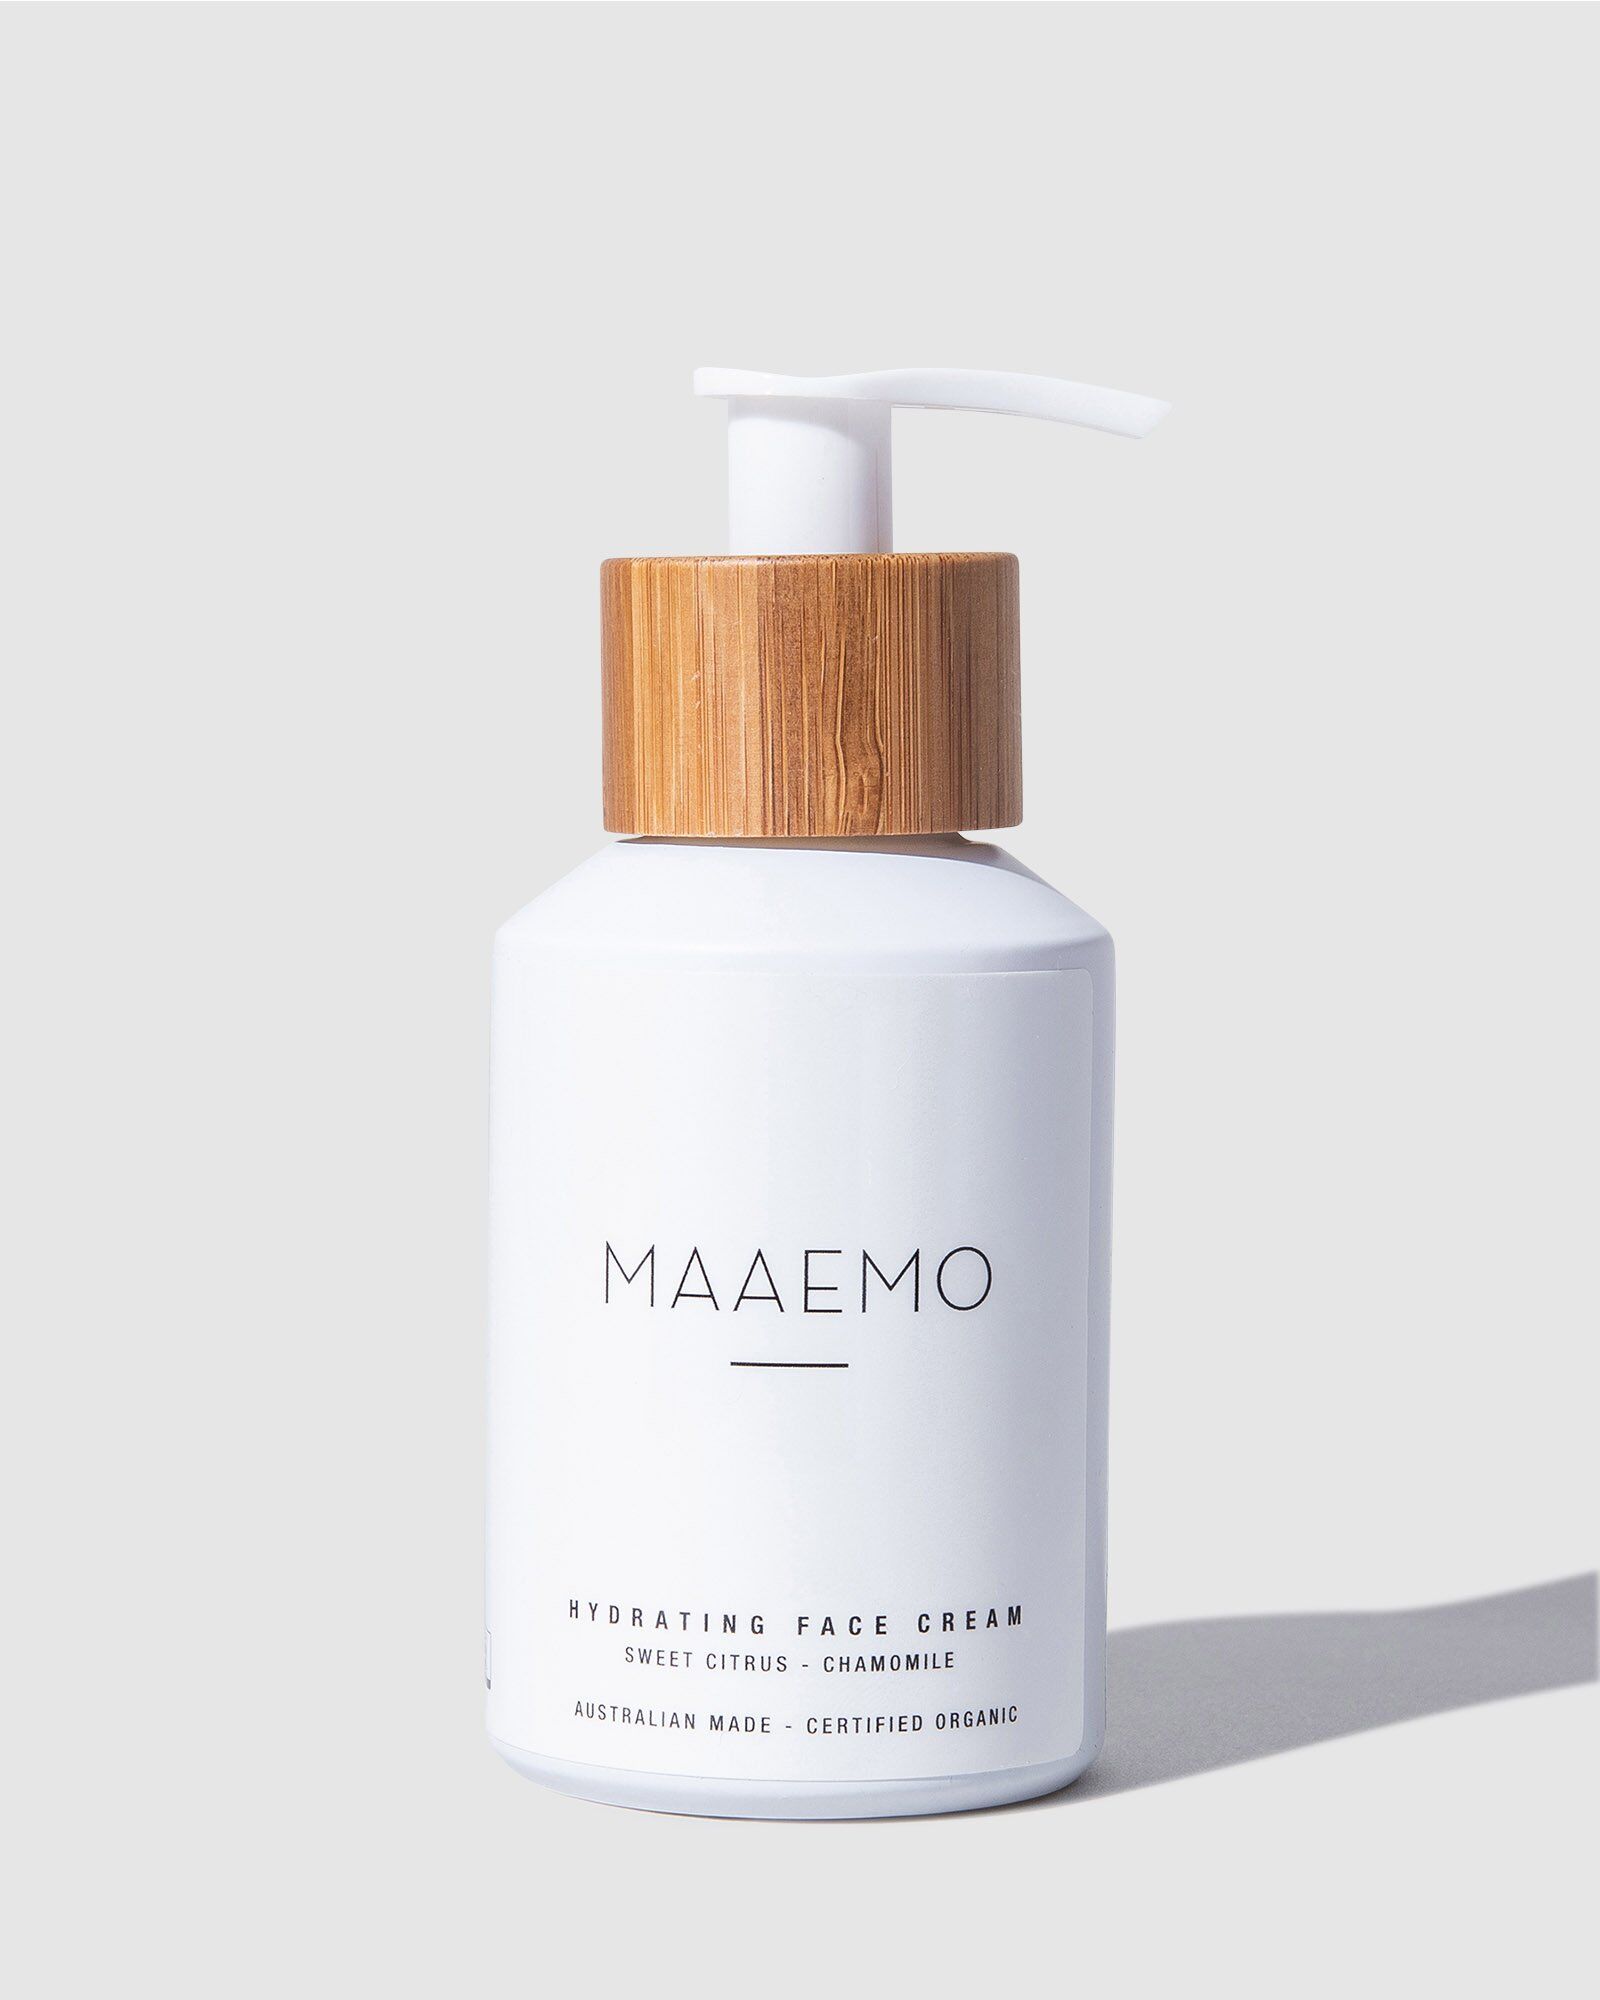 maaemo - Hydrating Face Cream- ACO CERTIFIED ORGANIC